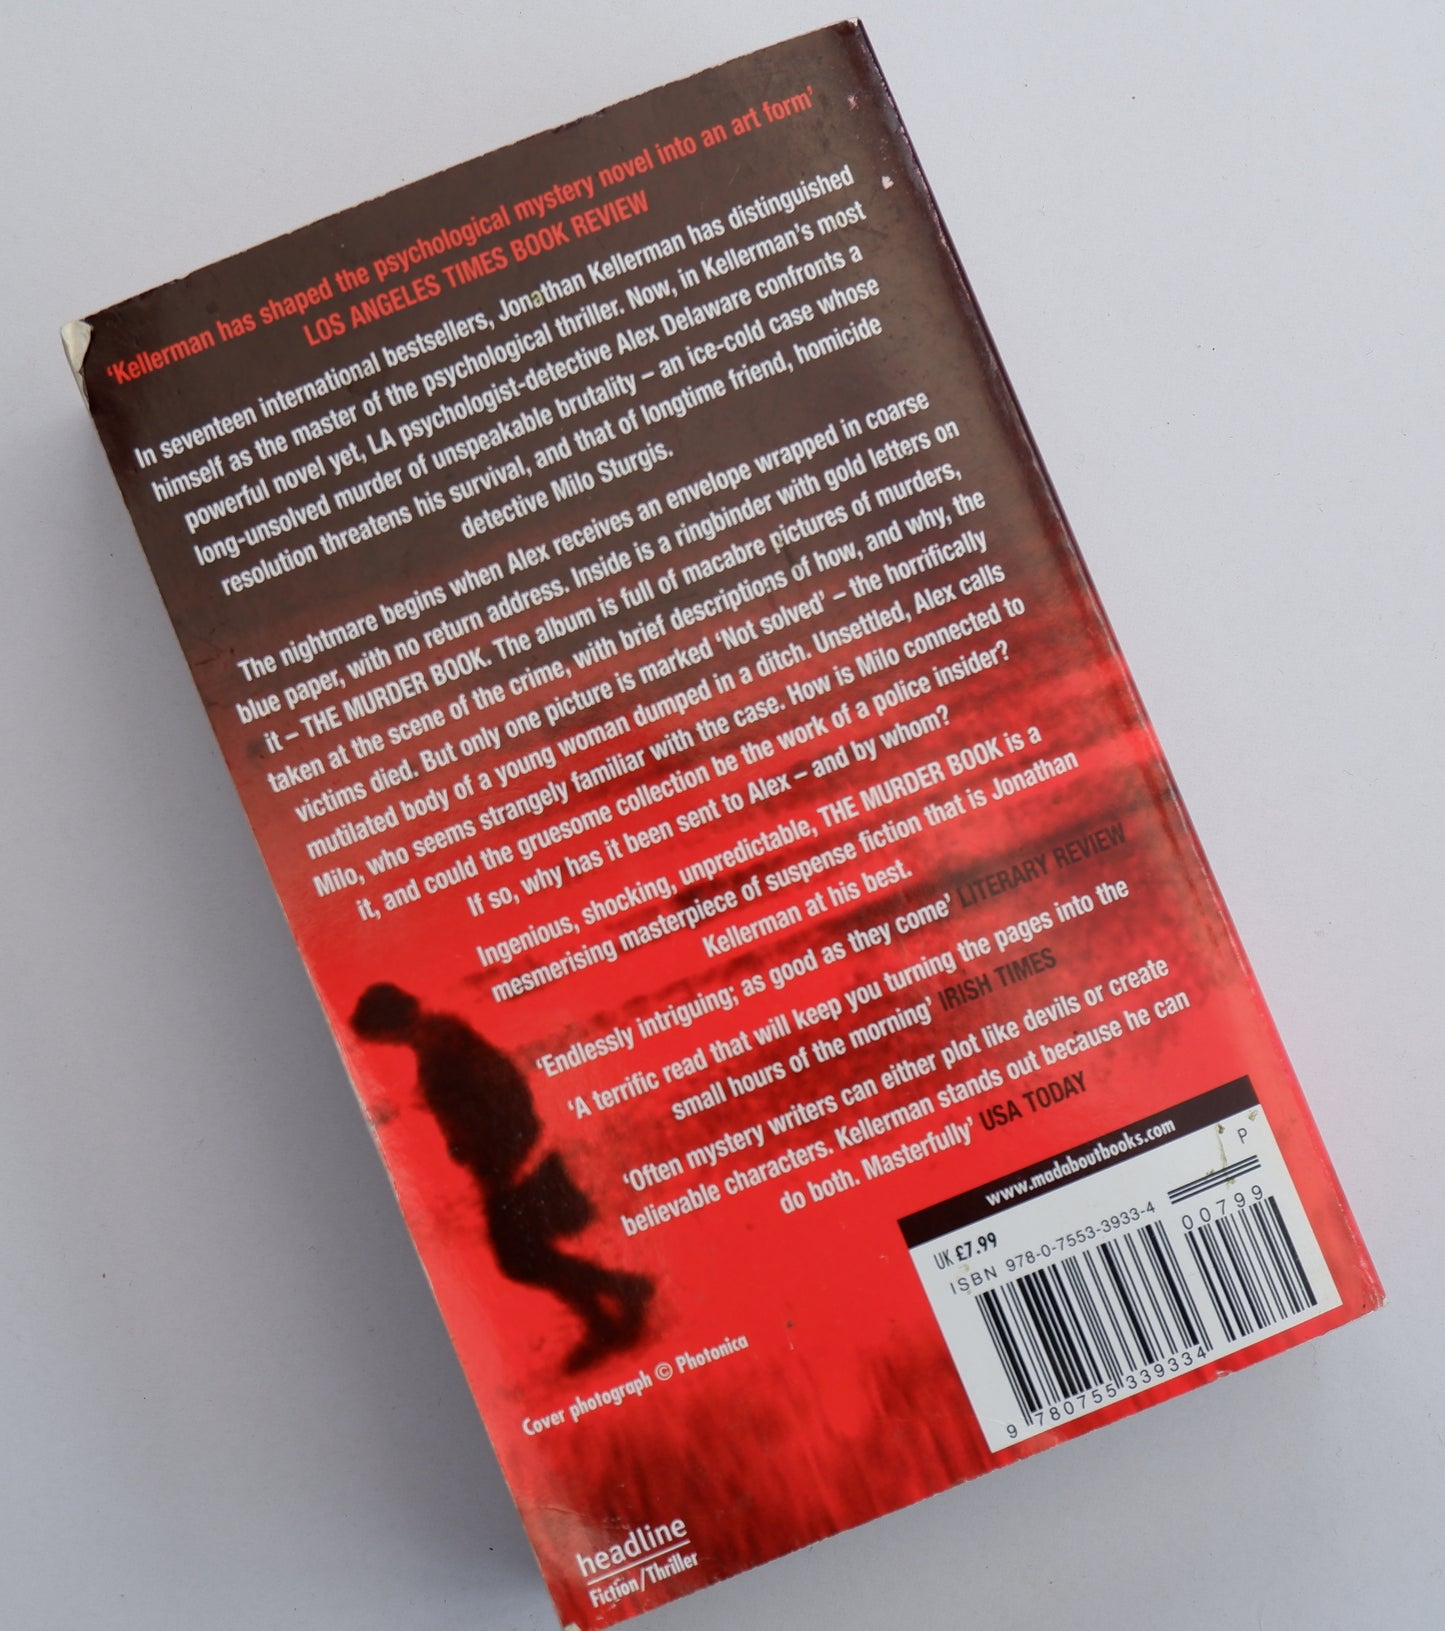 The Murder Book - Jonathan Killerman